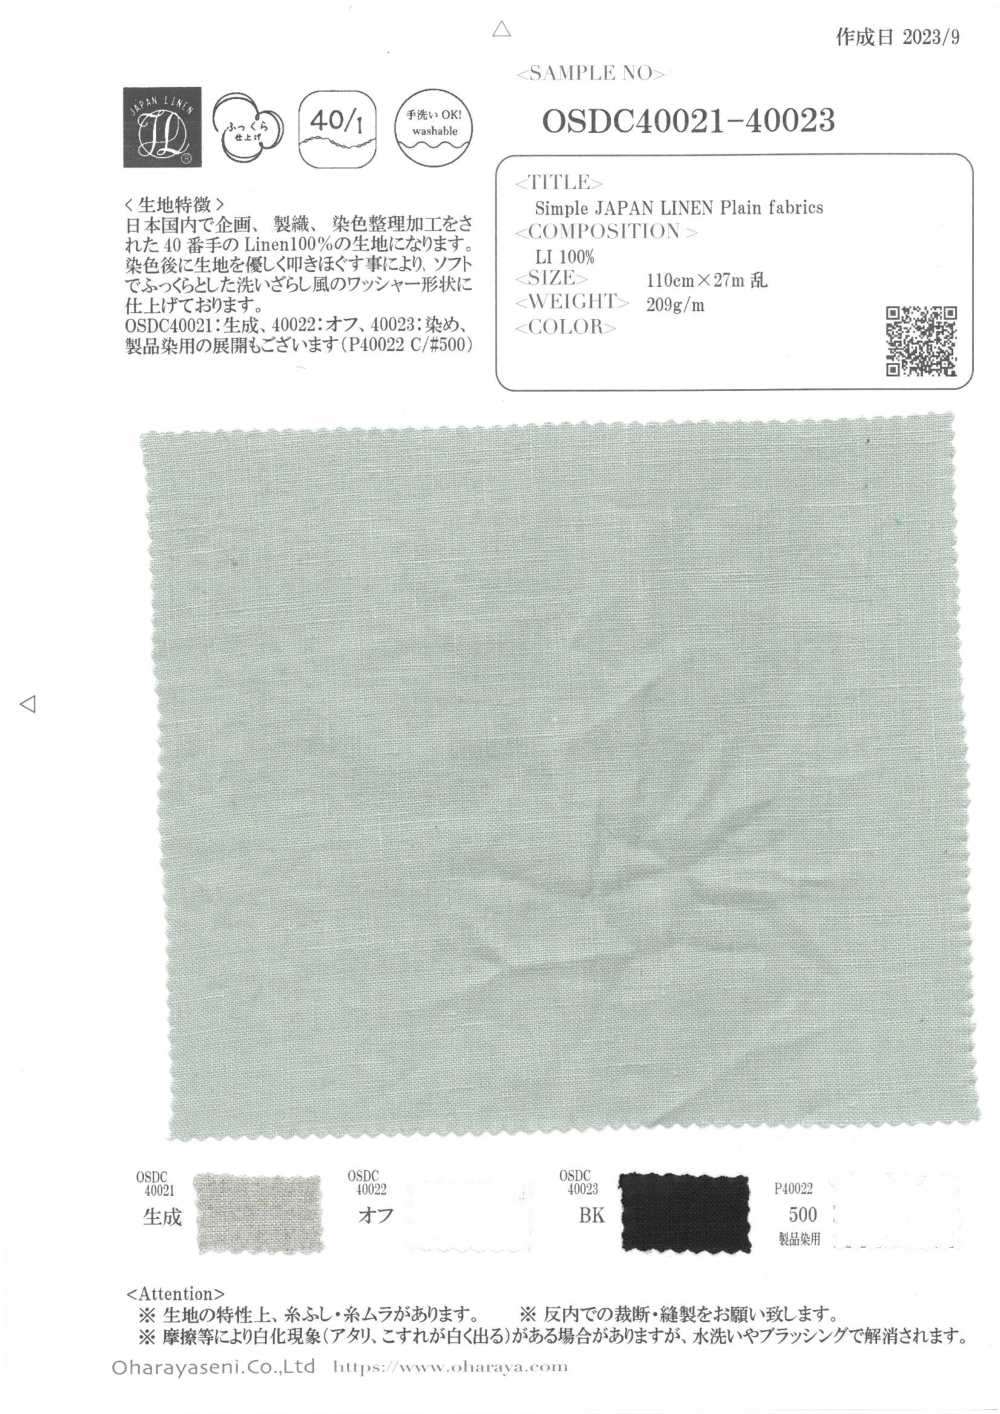 P40022 Einfache JAPAN LINEN Uni-Stoffe (Aus)[Textilgewebe] Oharayaseni